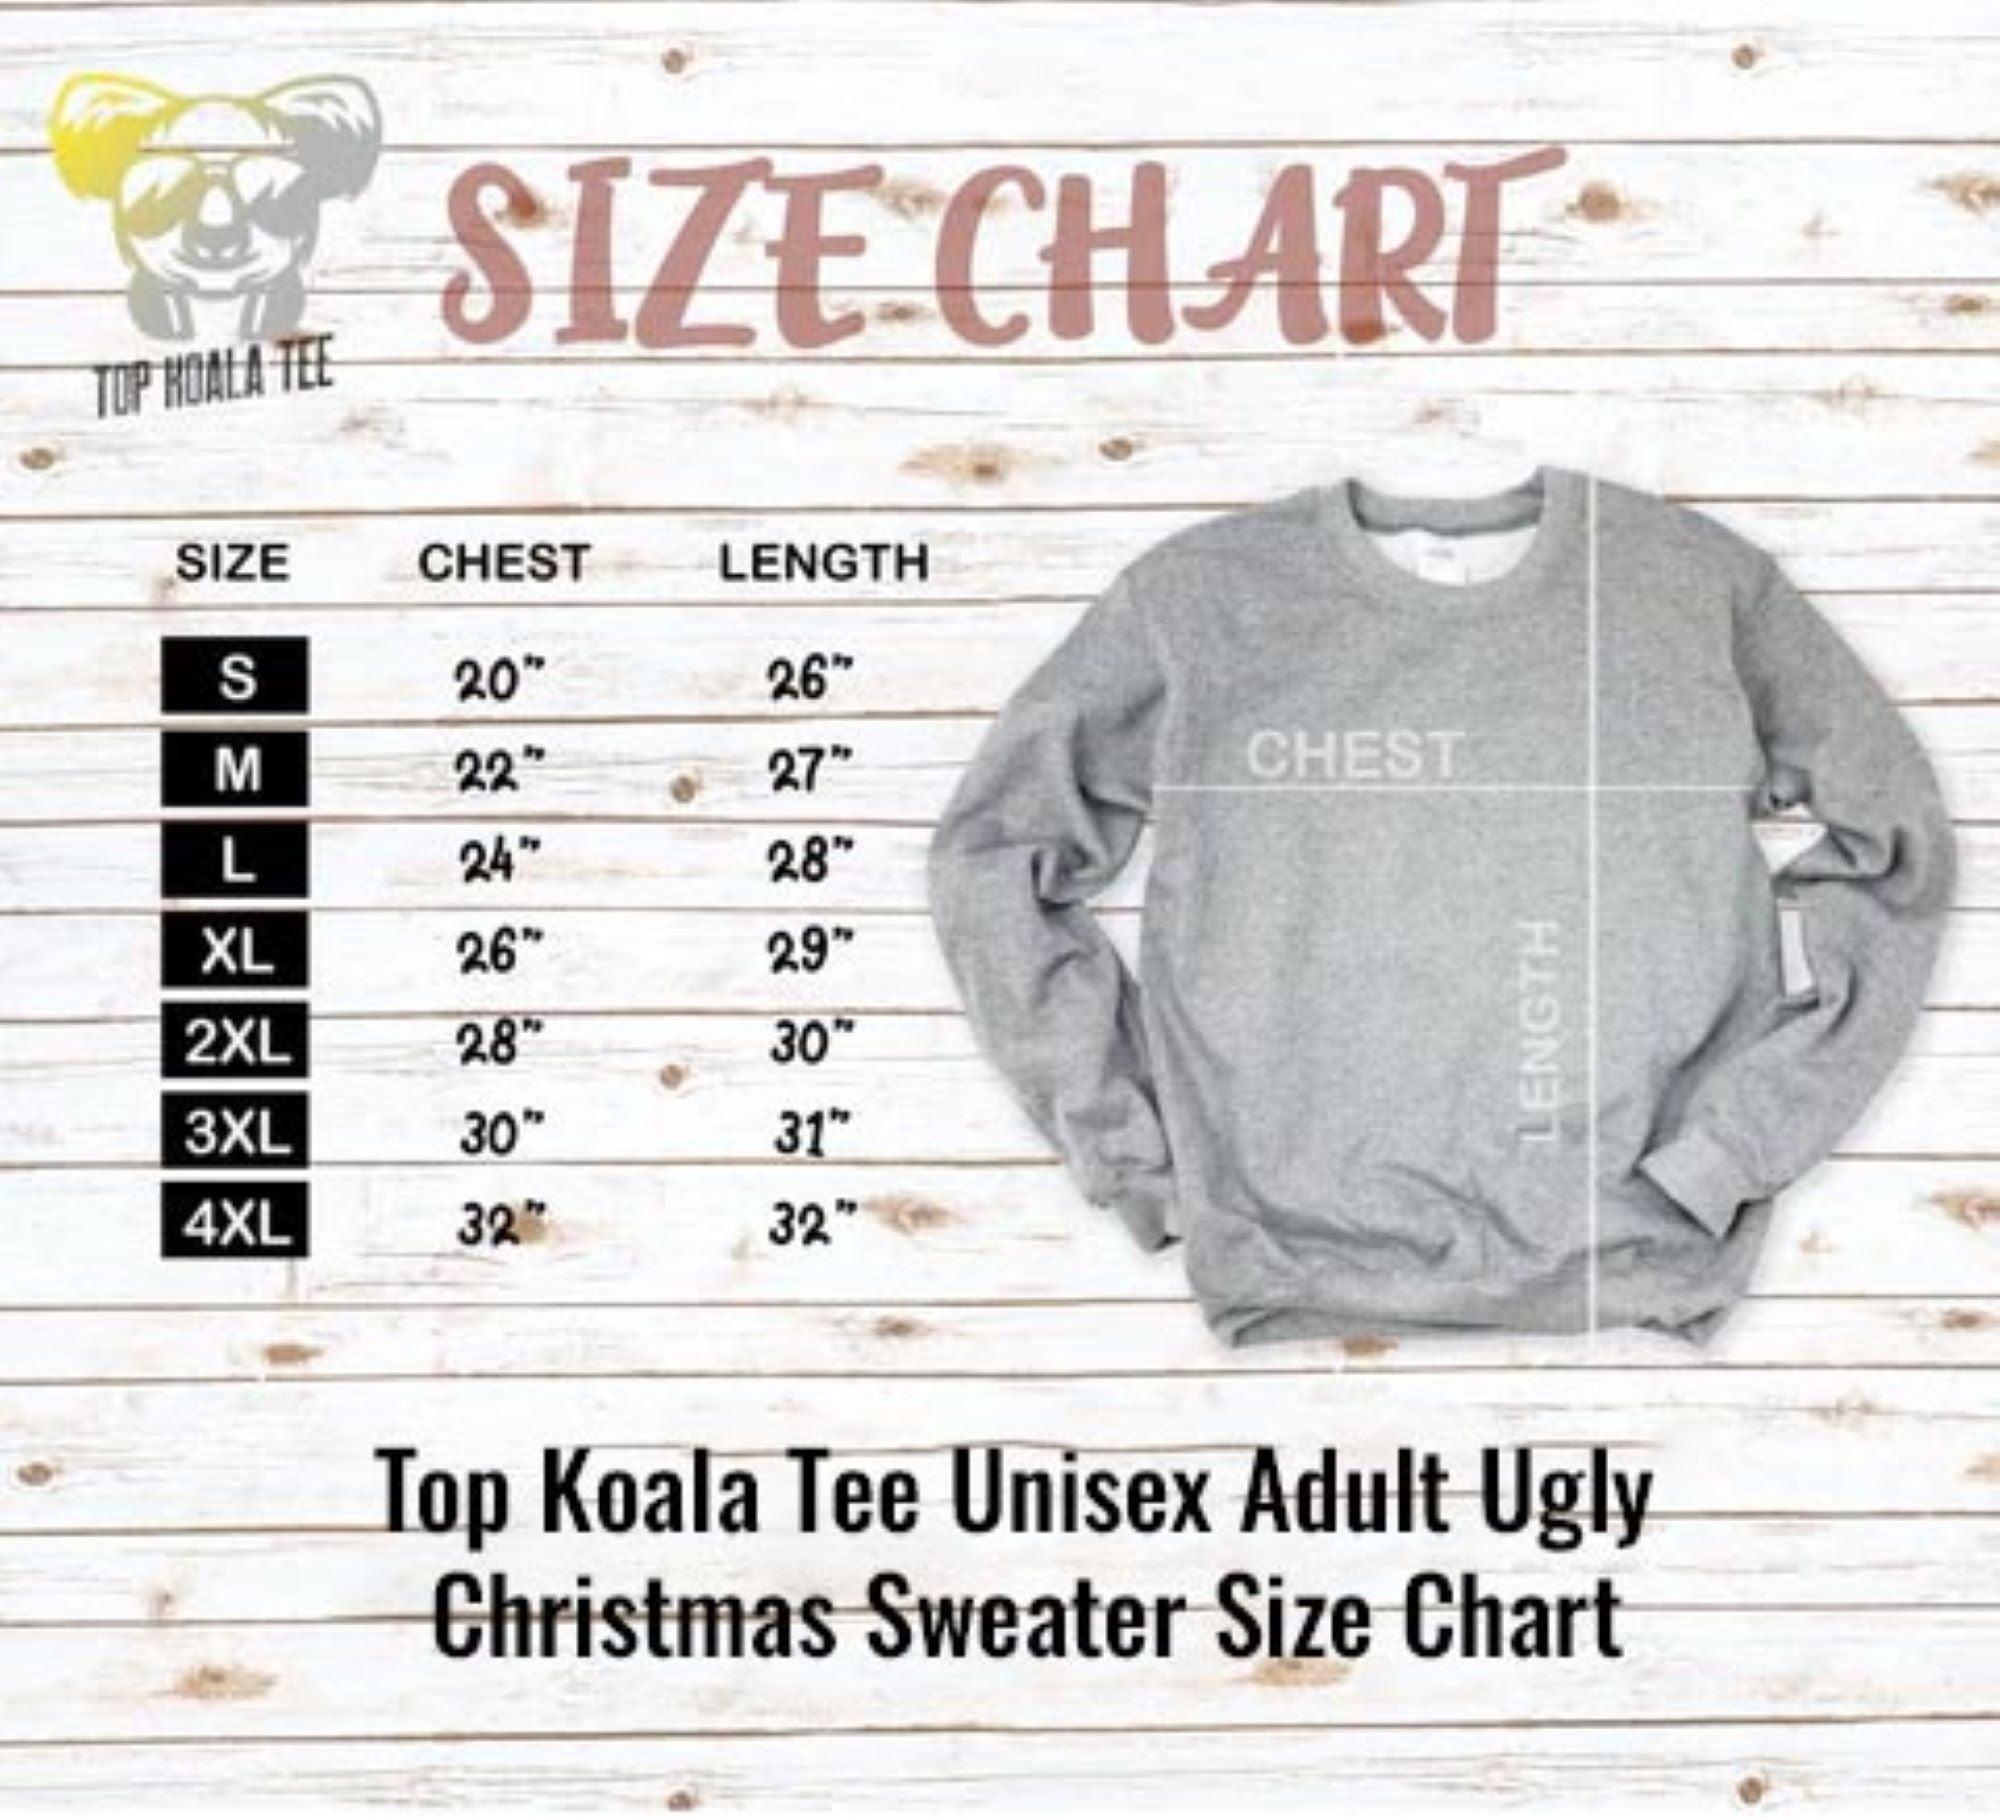 Don't Tread on Me Ugly Christmas Sweater Top Koala Tee Crewneck Pullover - TopKoalaTee